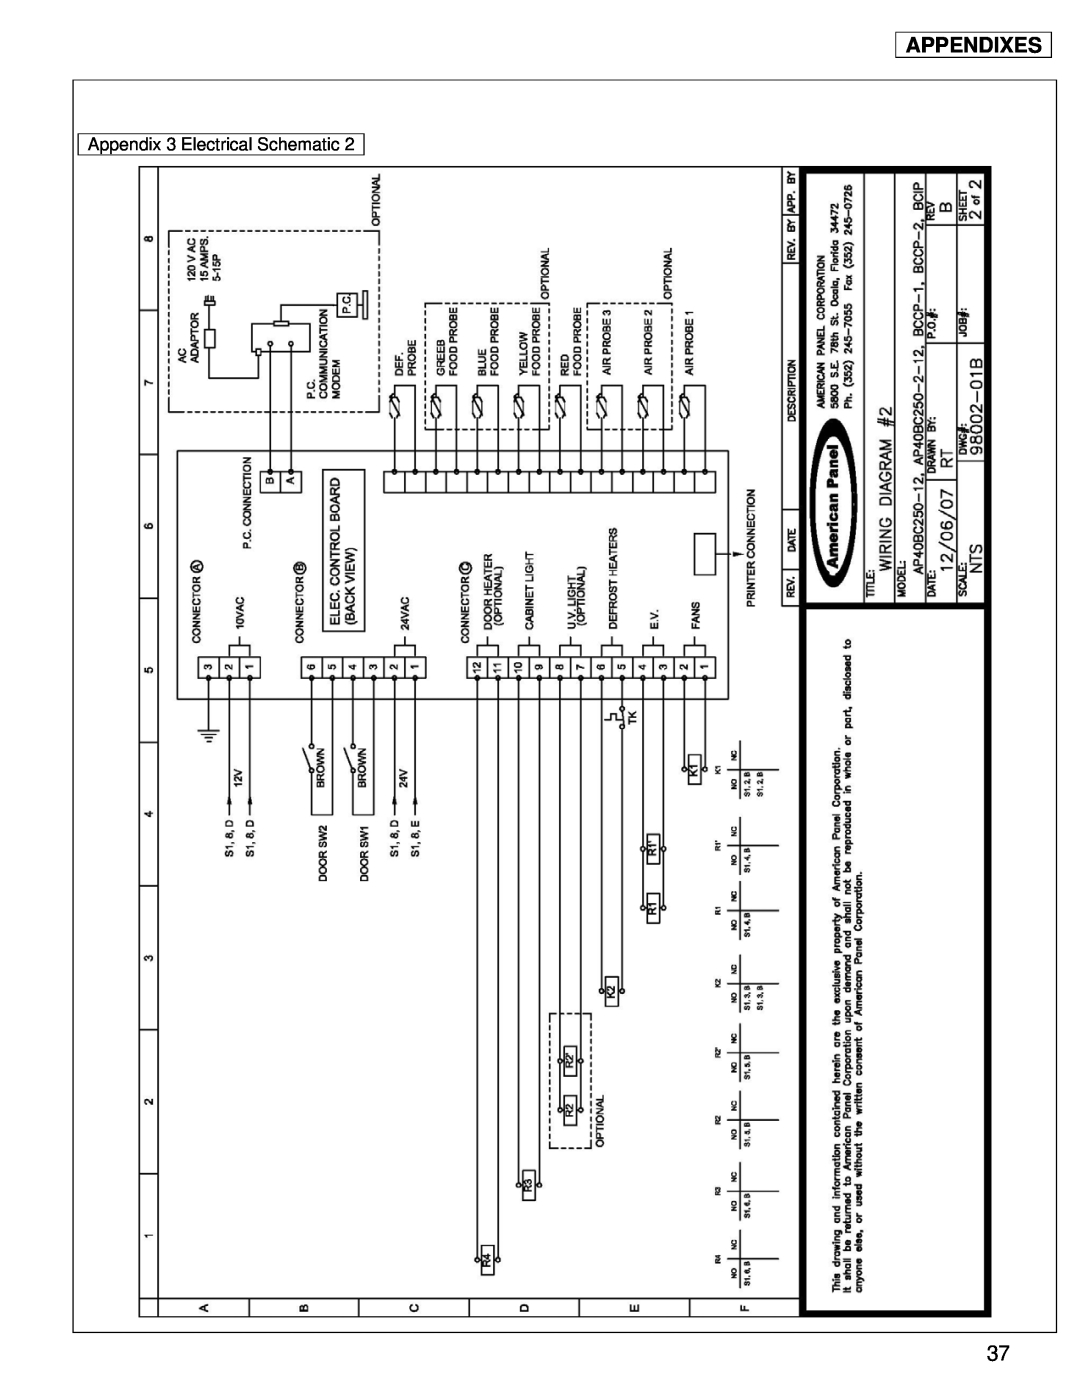 American Panel AP40BC250-12, BCCP-1, BCIP, BCCP-2, AP40BC250-2-12 manual Appendixes, Appendix 3 Electrical Schematic 